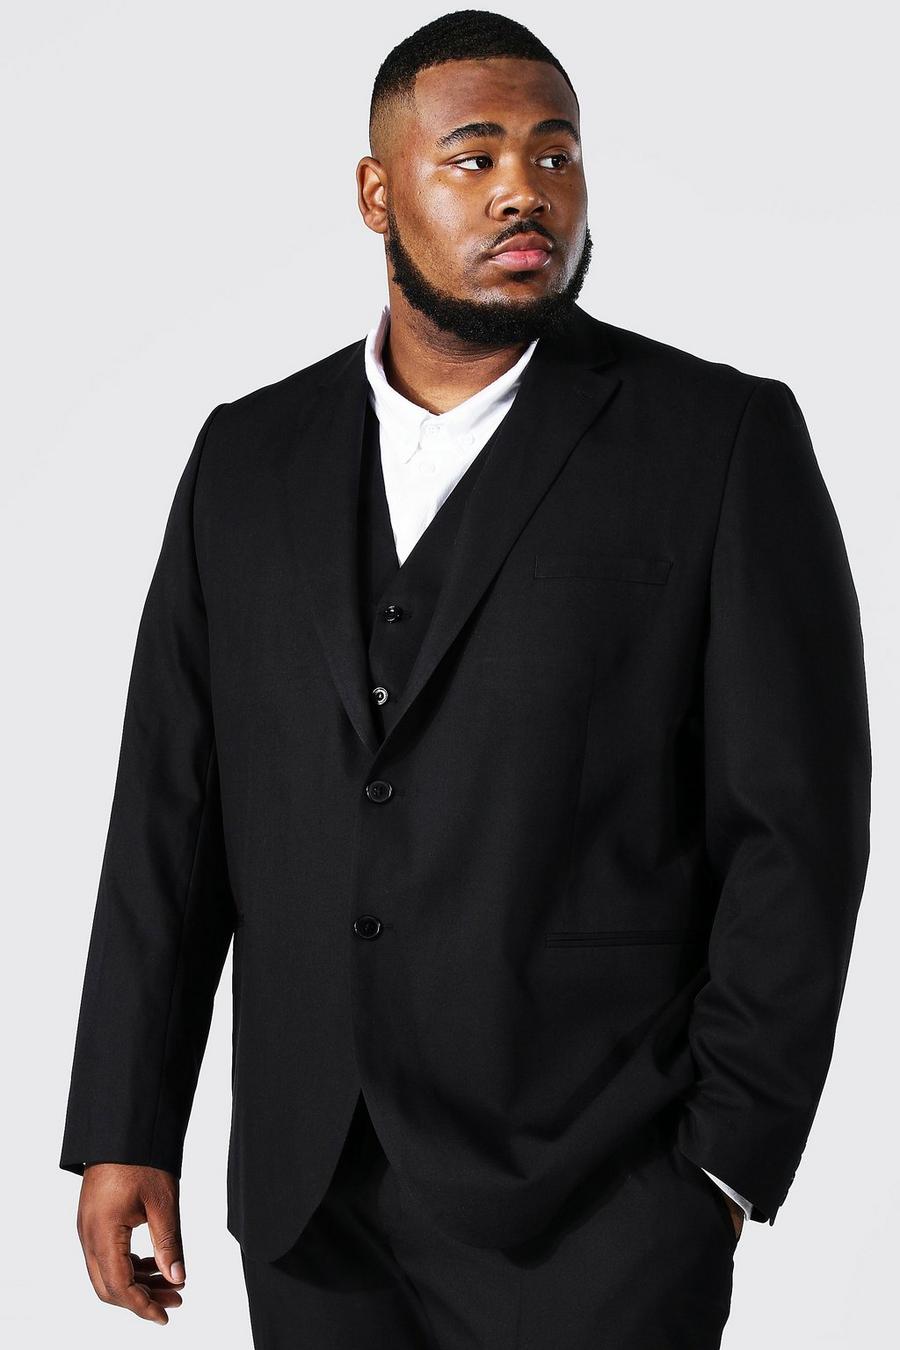 Black Plus Size Slim Single Breasted Suit Jacket